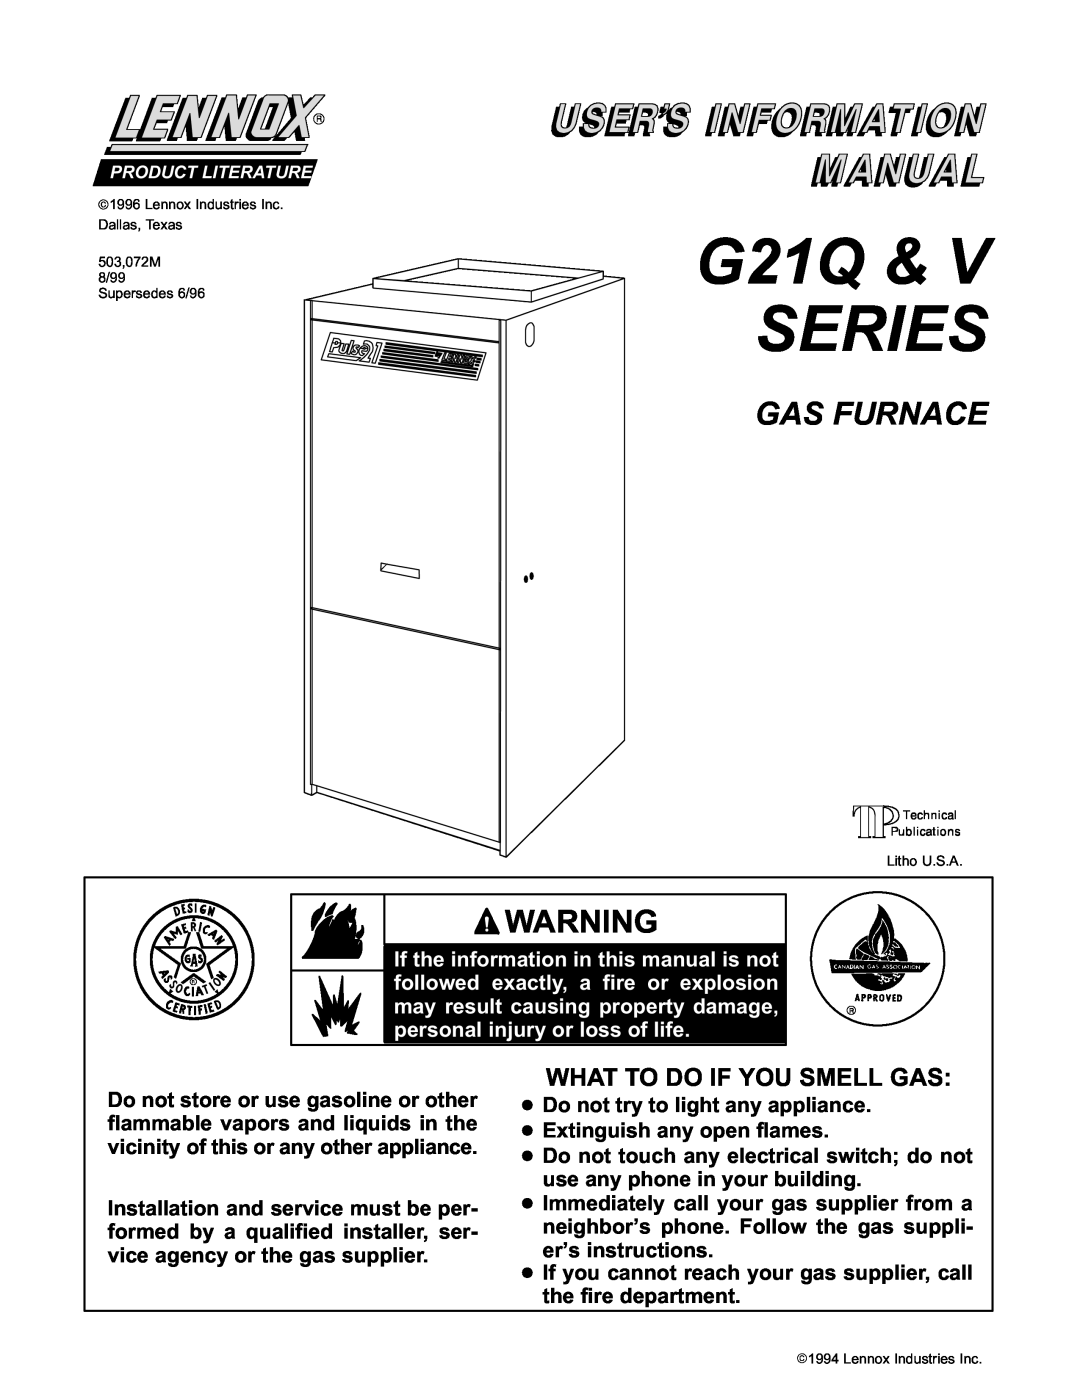 Lennox International Inc G21 V SERIES manual G21Q & V SERIES, Gas Furnace, What To Do If You Smell Gas 